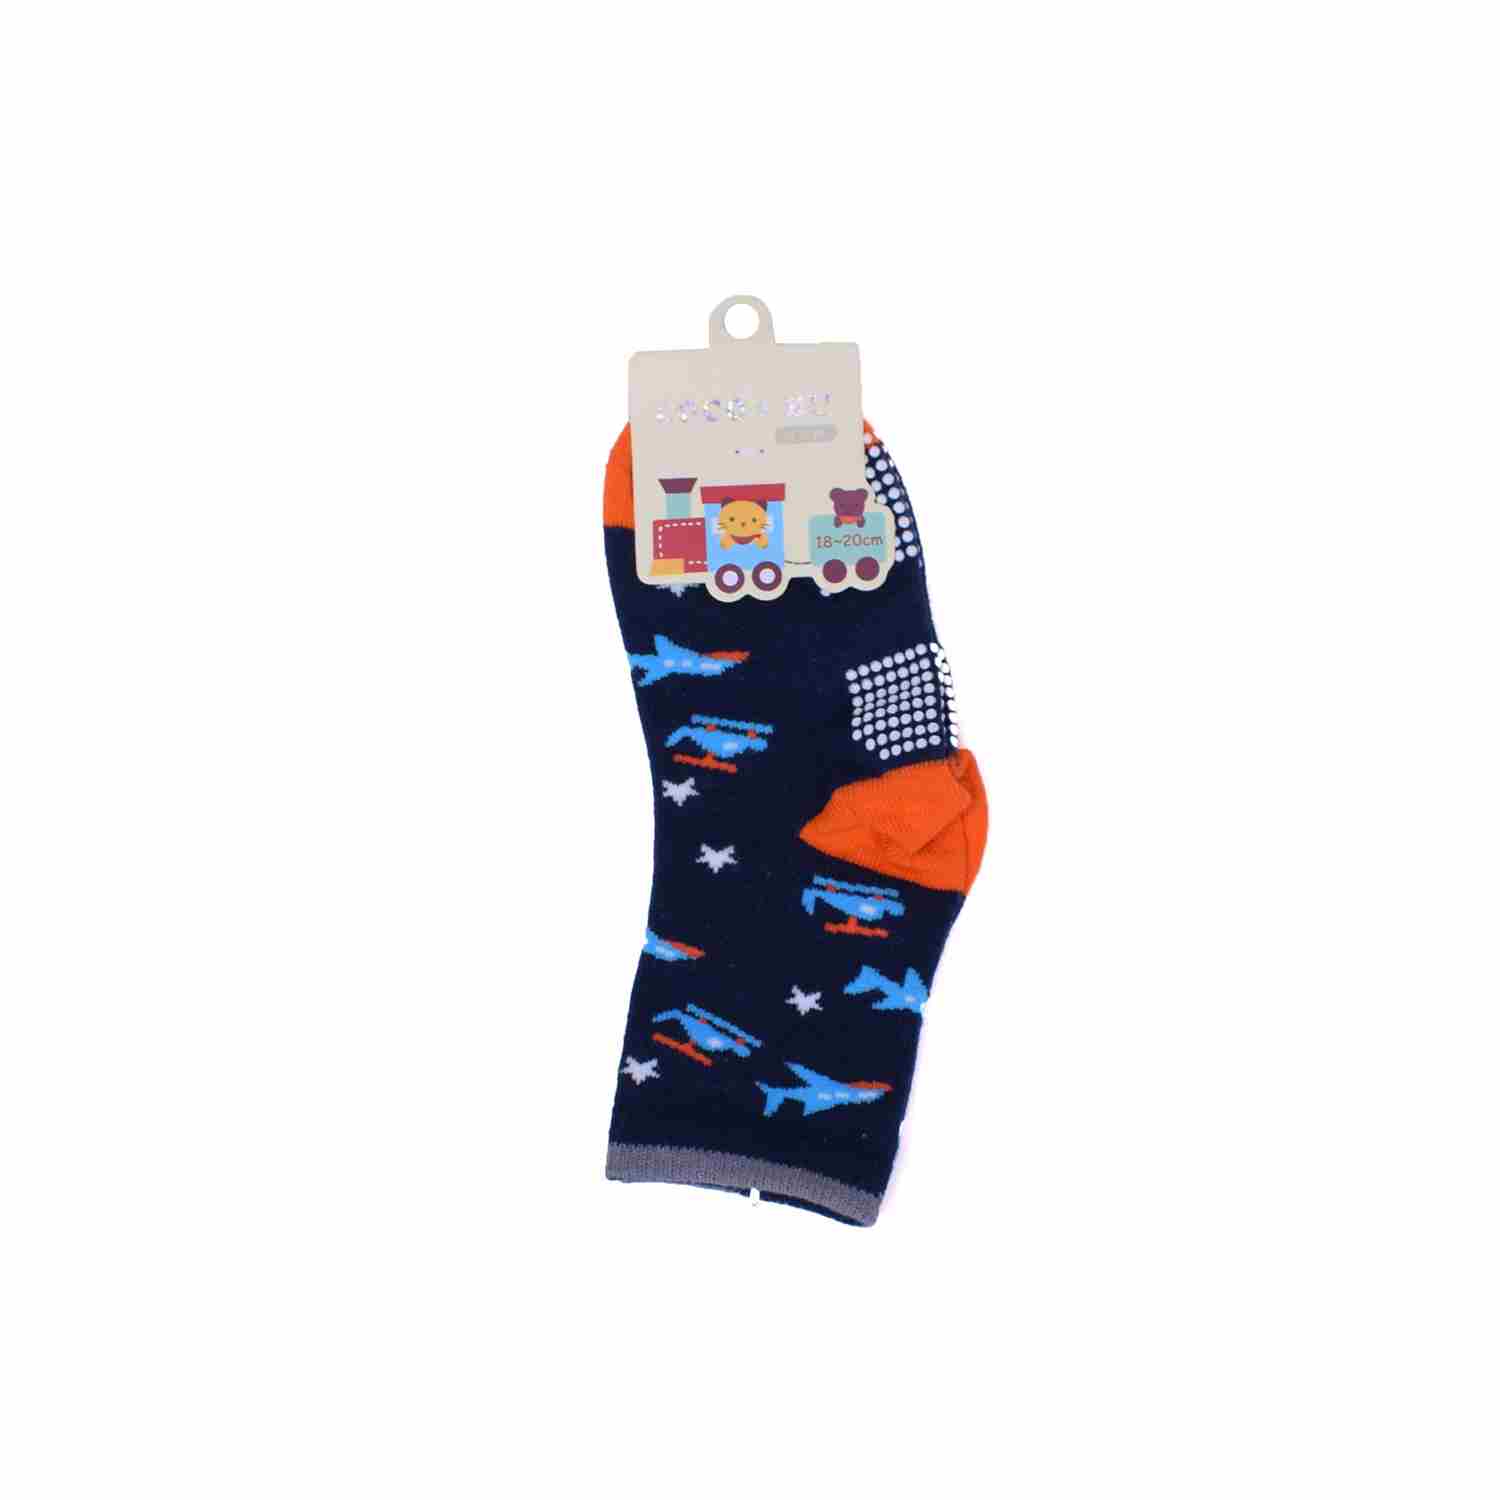 COCO BU Grip Socks Aeroplane Print (18-20cm) - Blue